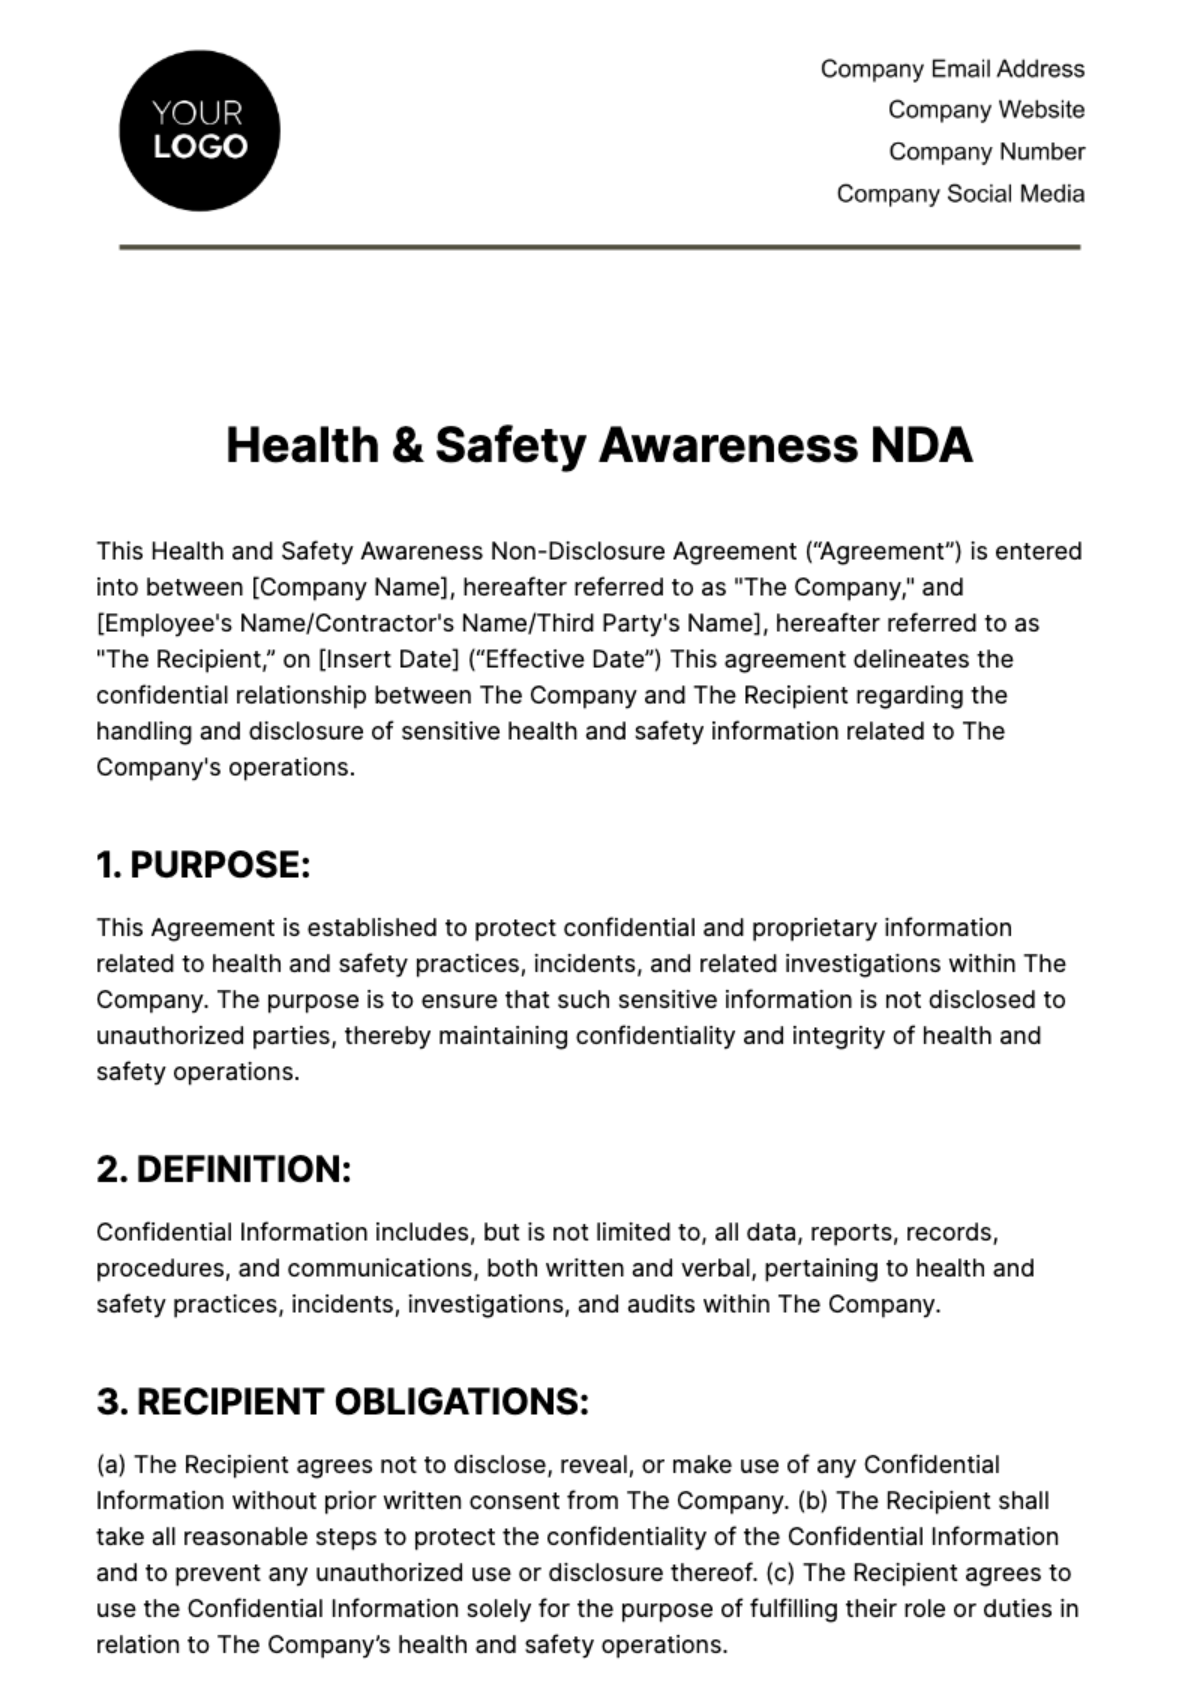 Health & Safety Awareness NDA Template